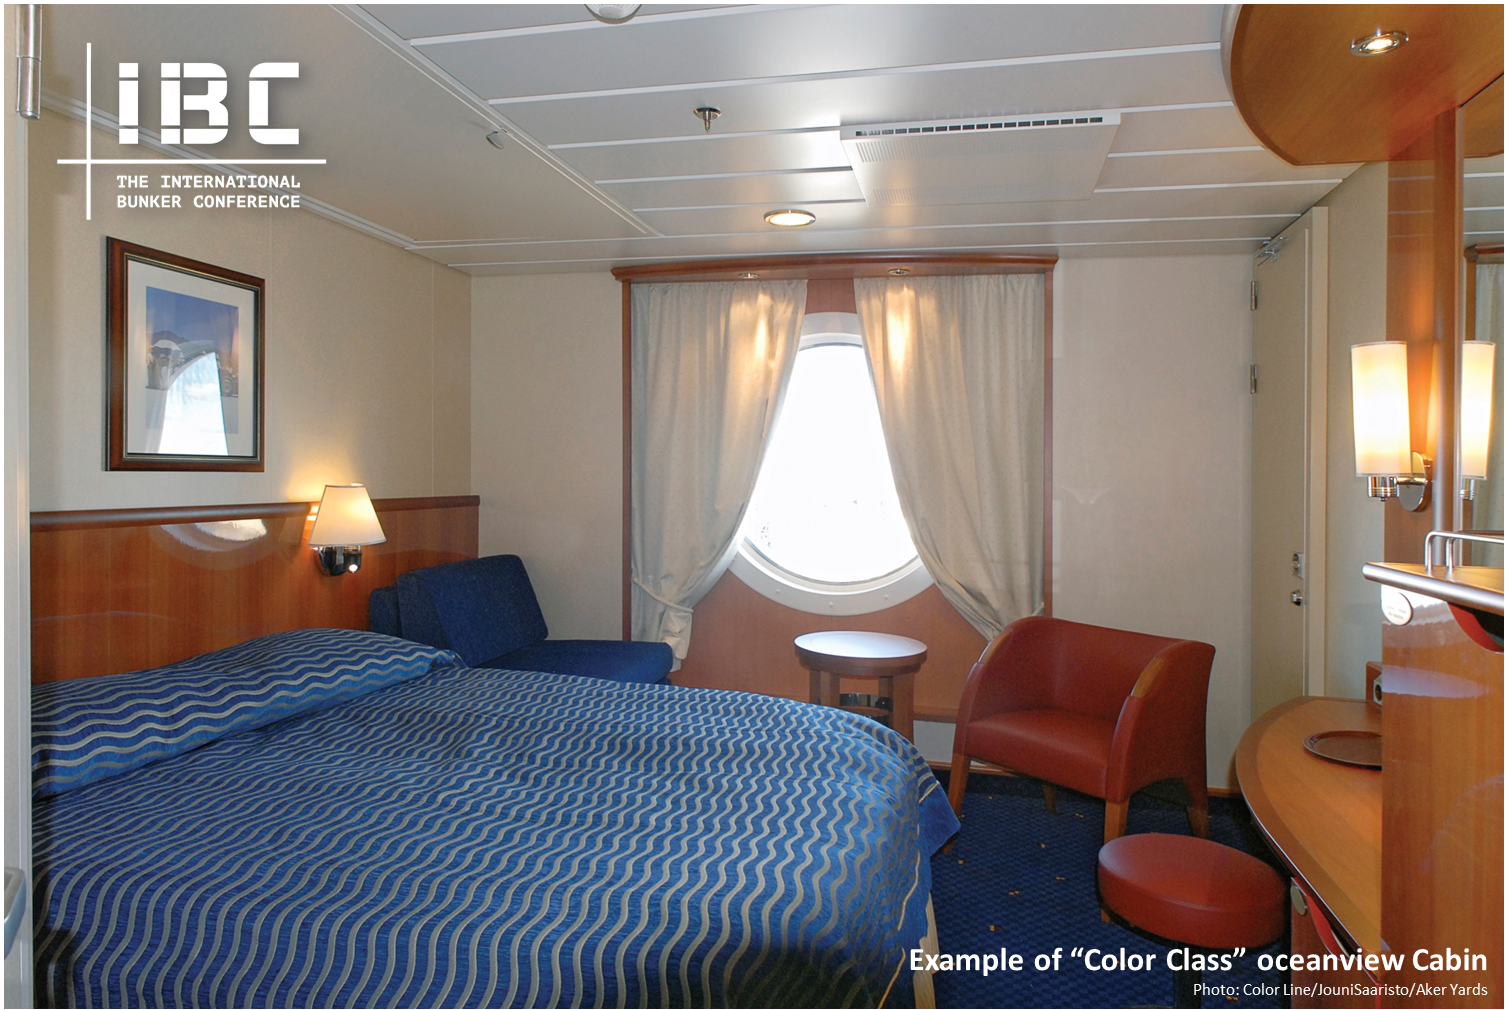 2. "Color Class" Oceanview Cabin - Single occupancy